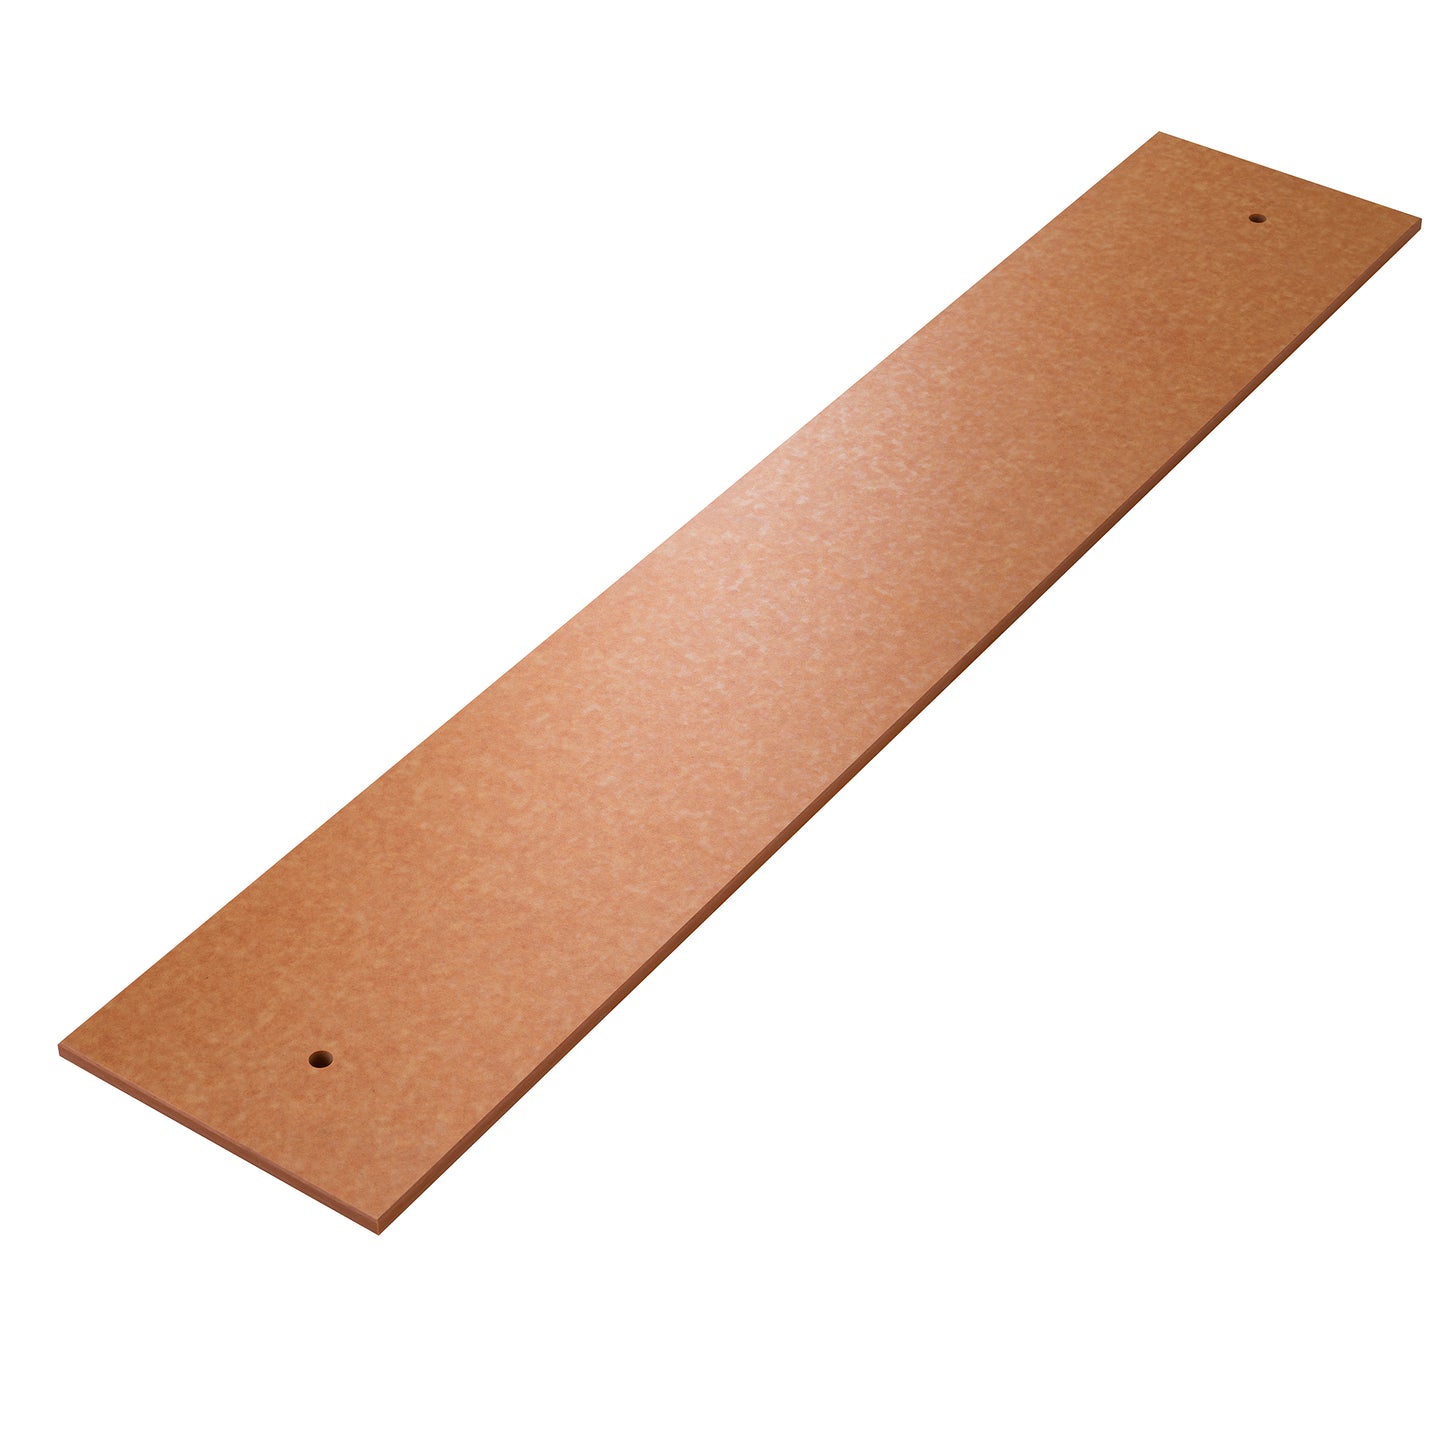 Composite wood-tone cutting board - 1/2" X 11-3/4" X 72-1/4" (SKU - 807781)